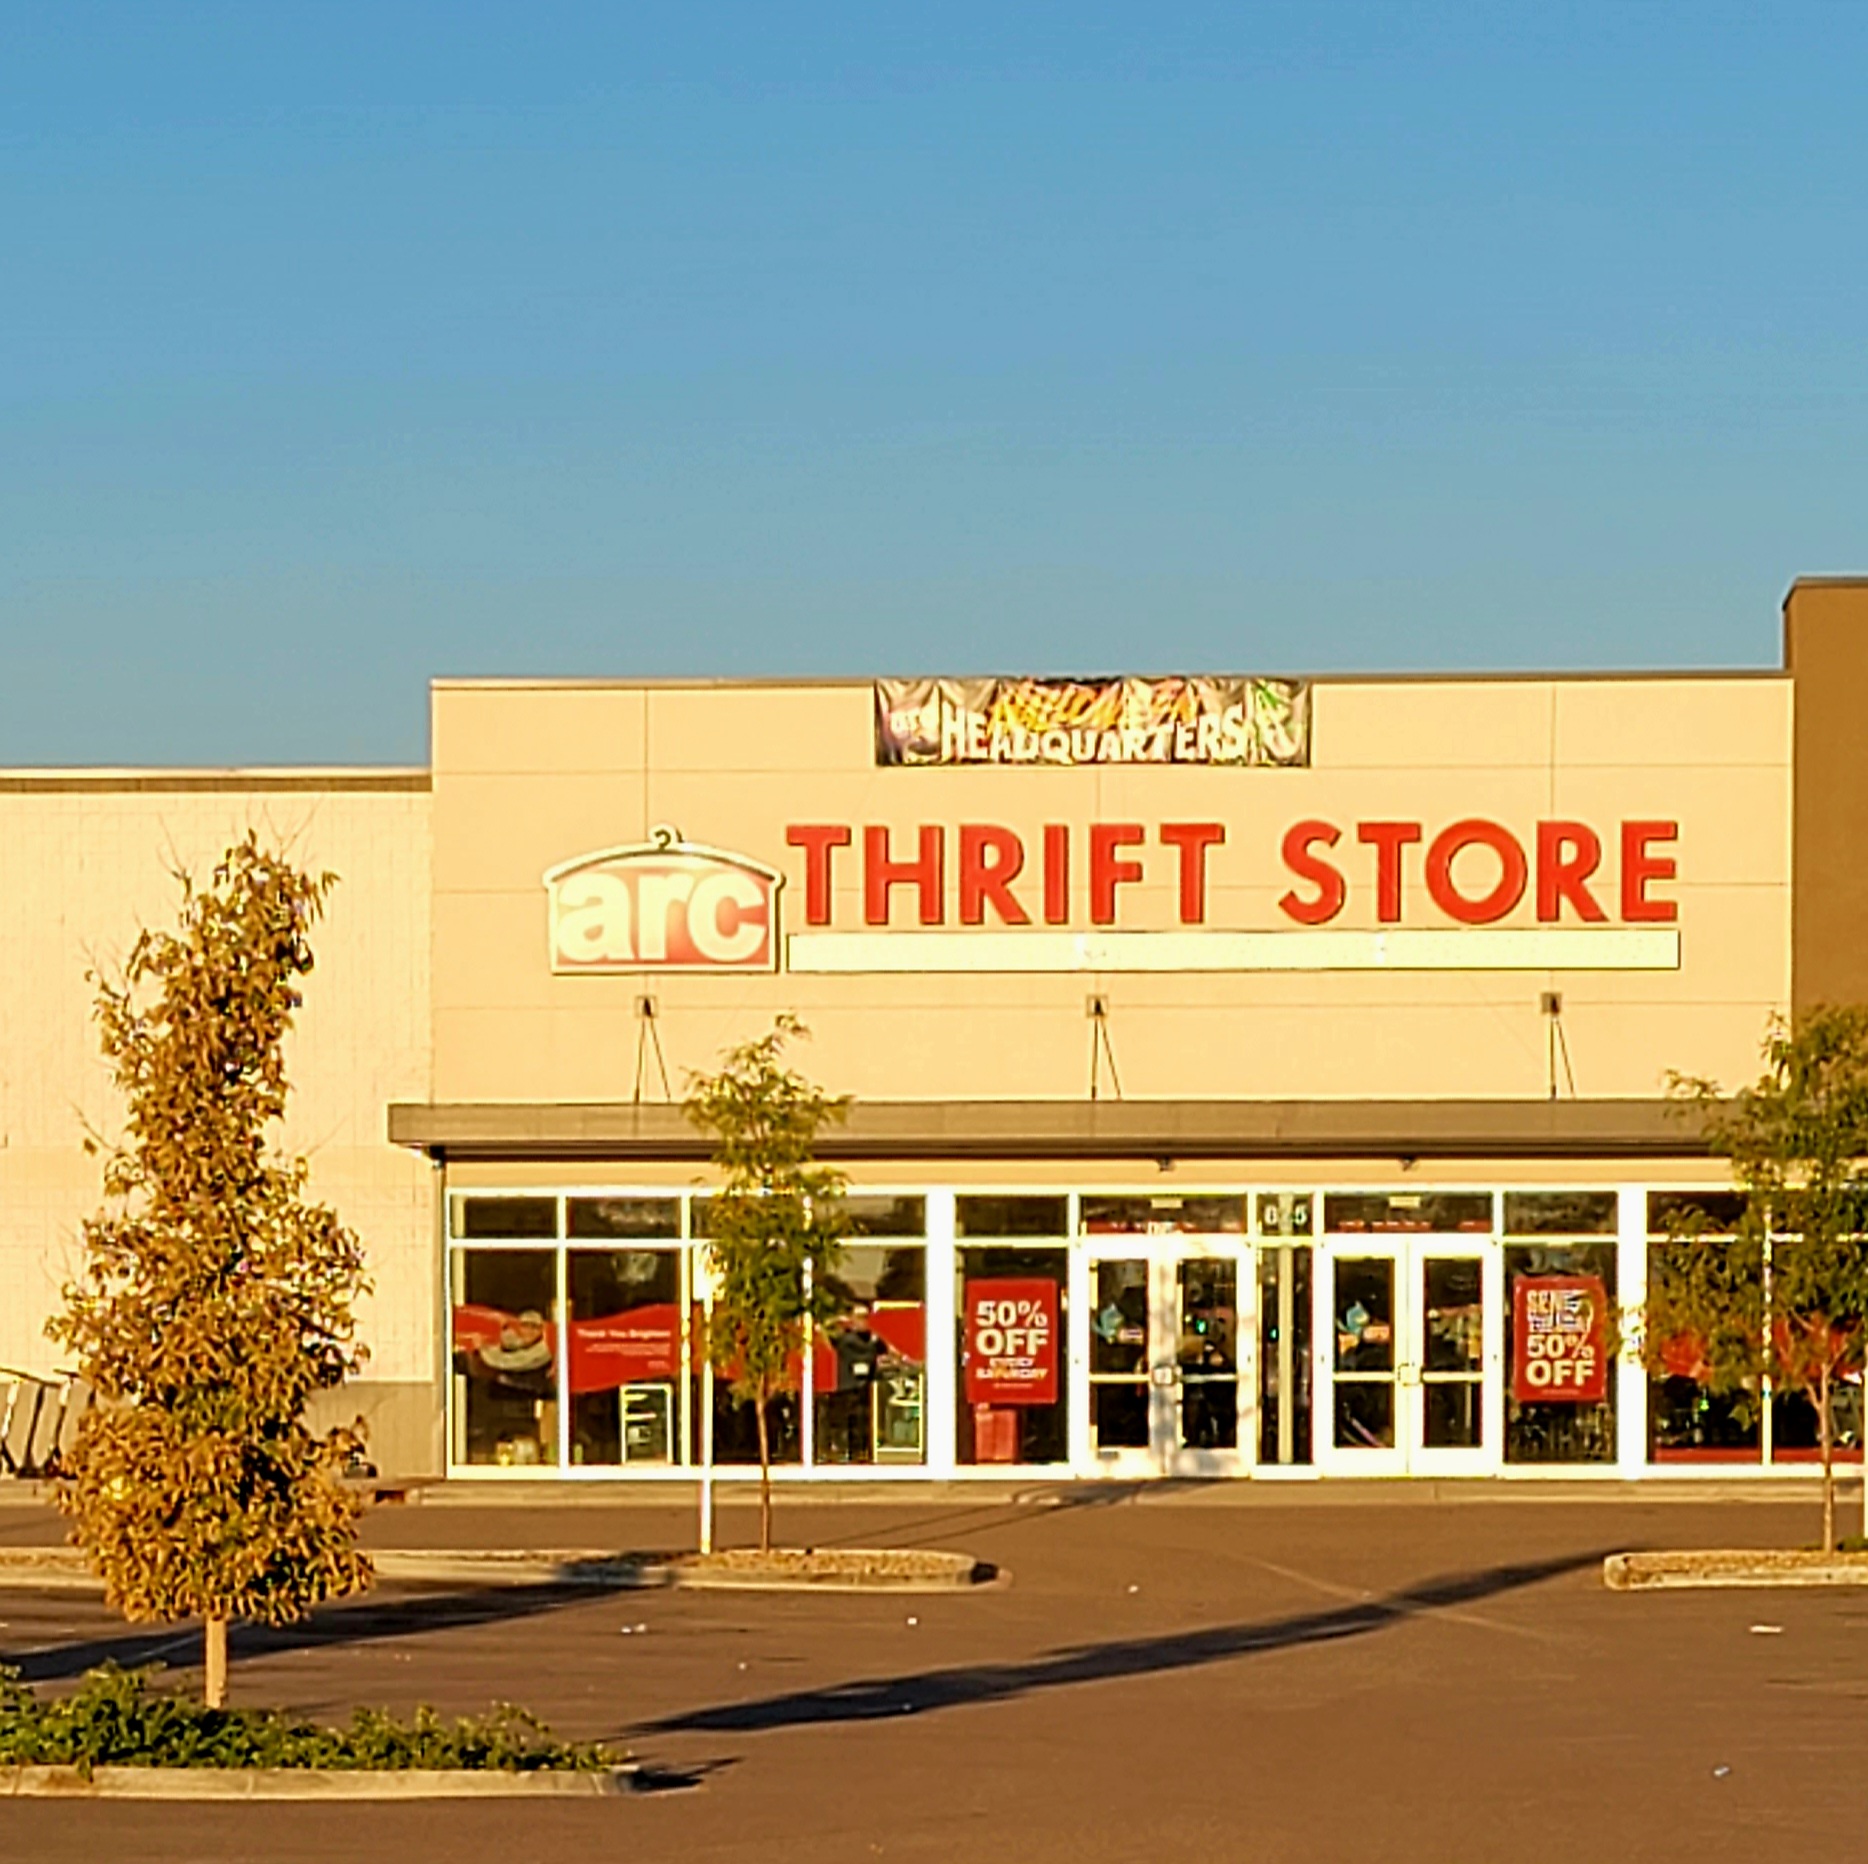 arc Thrift Stores